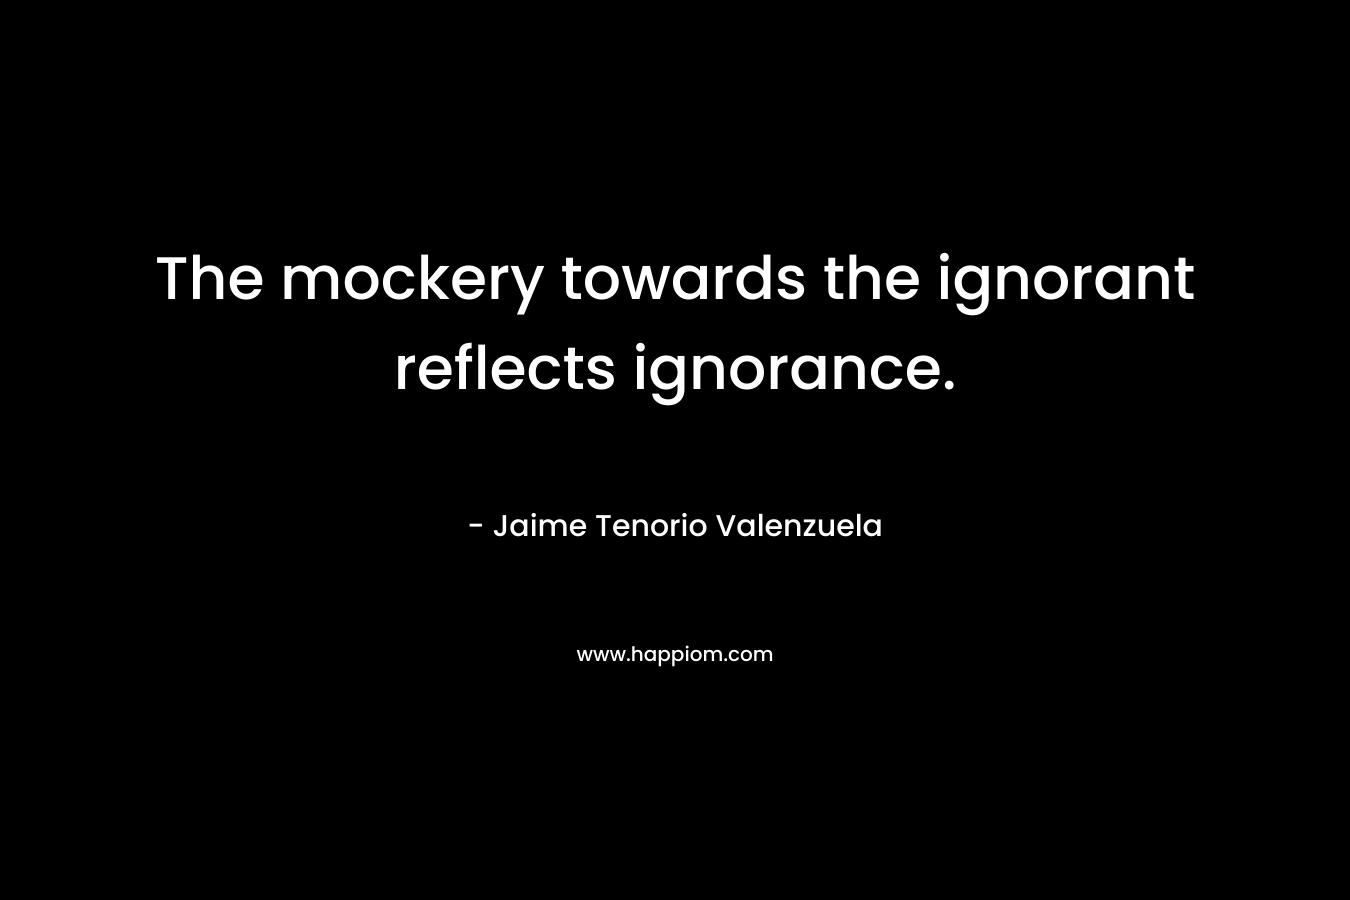 The mockery towards the ignorant reflects ignorance.